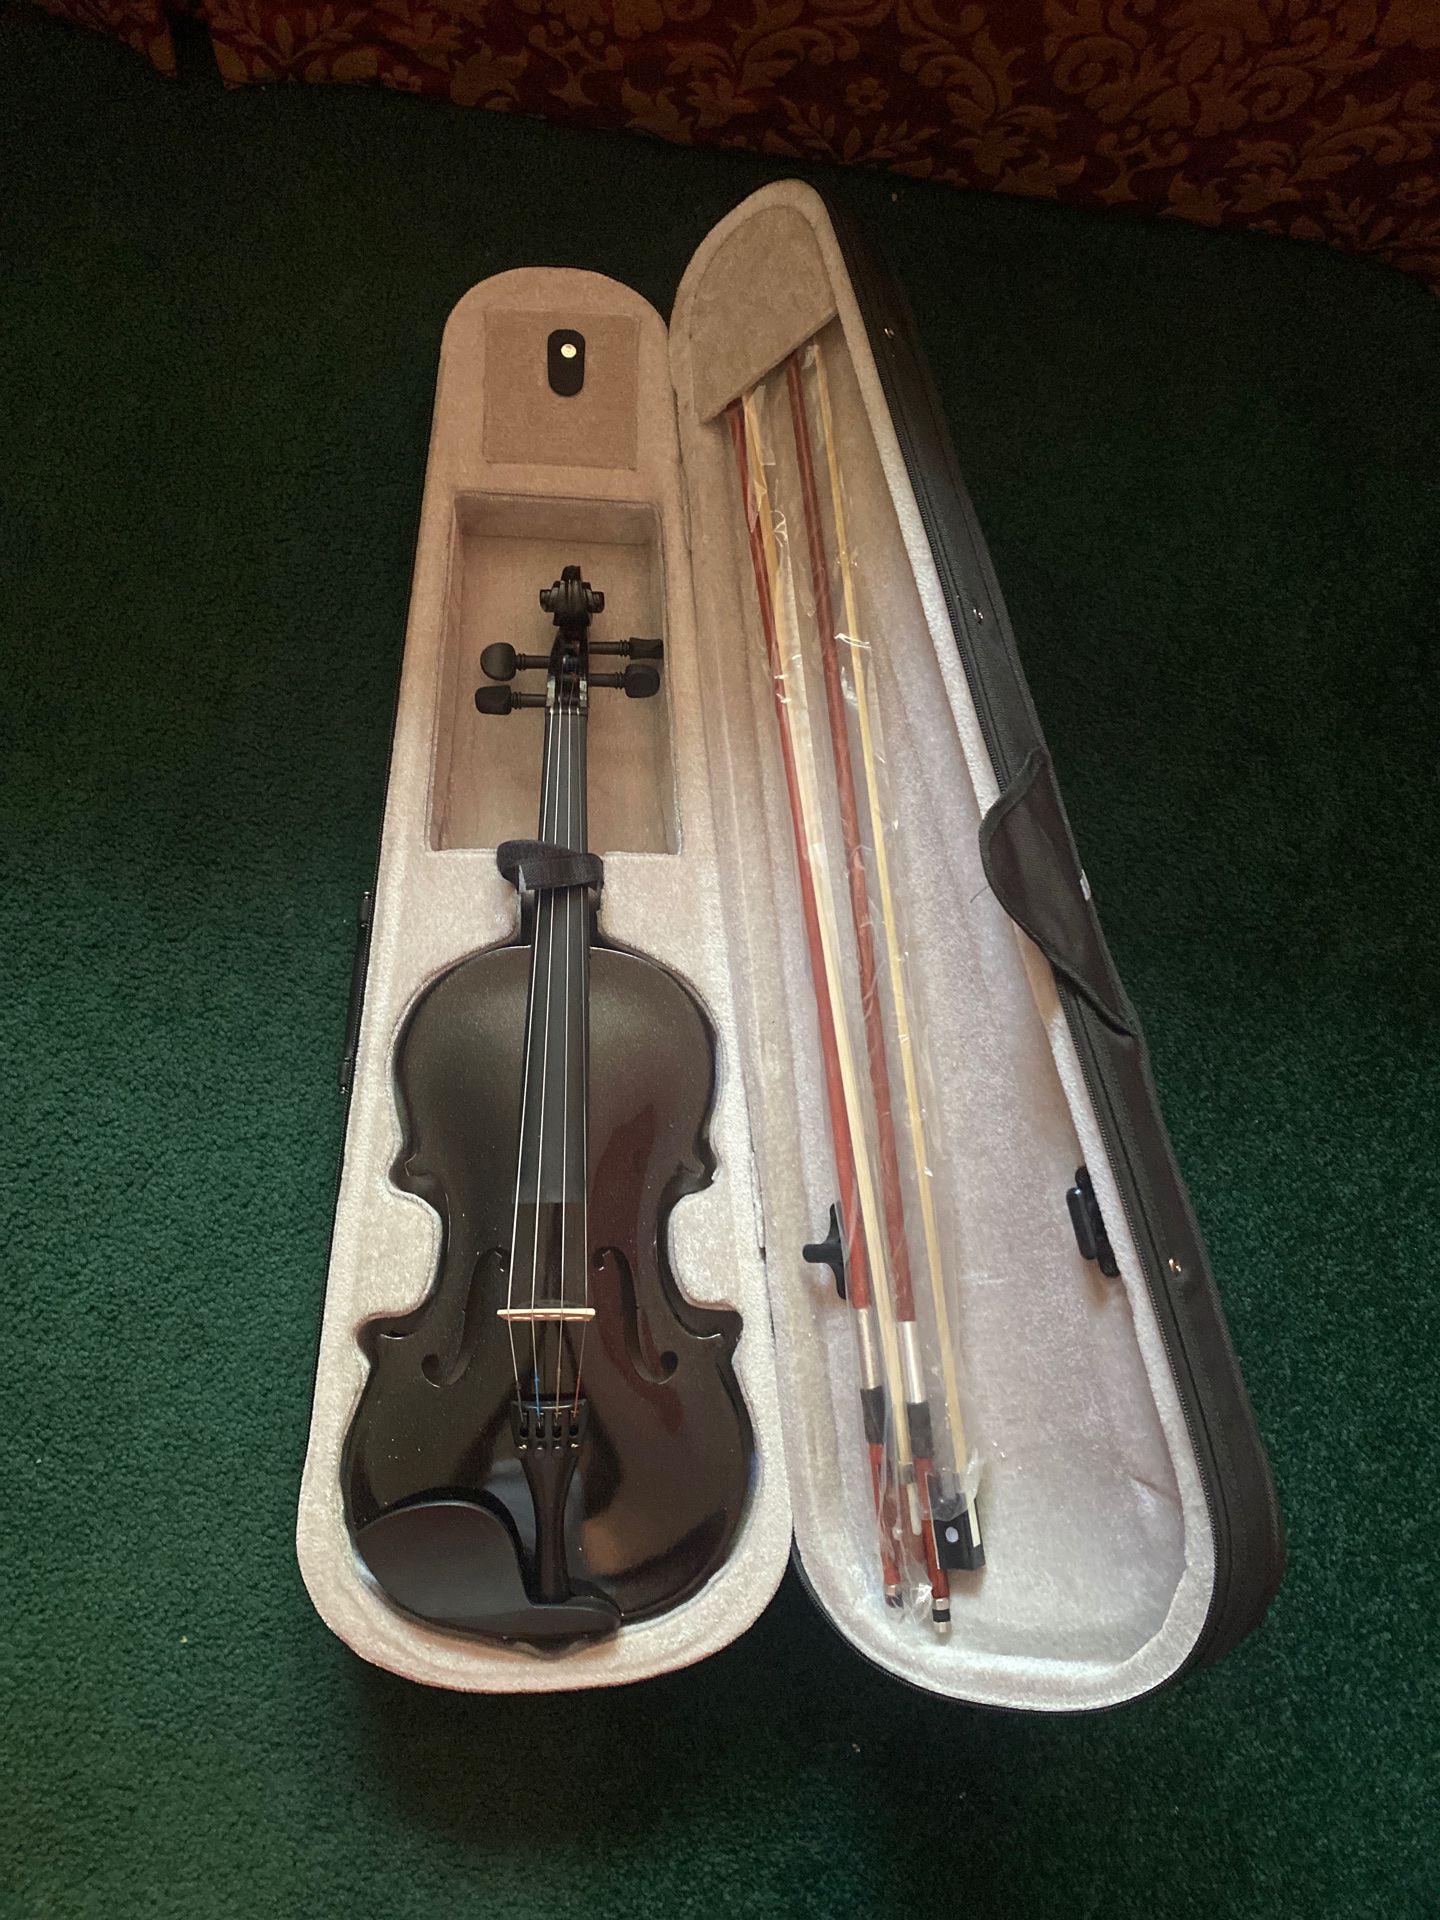 New violin